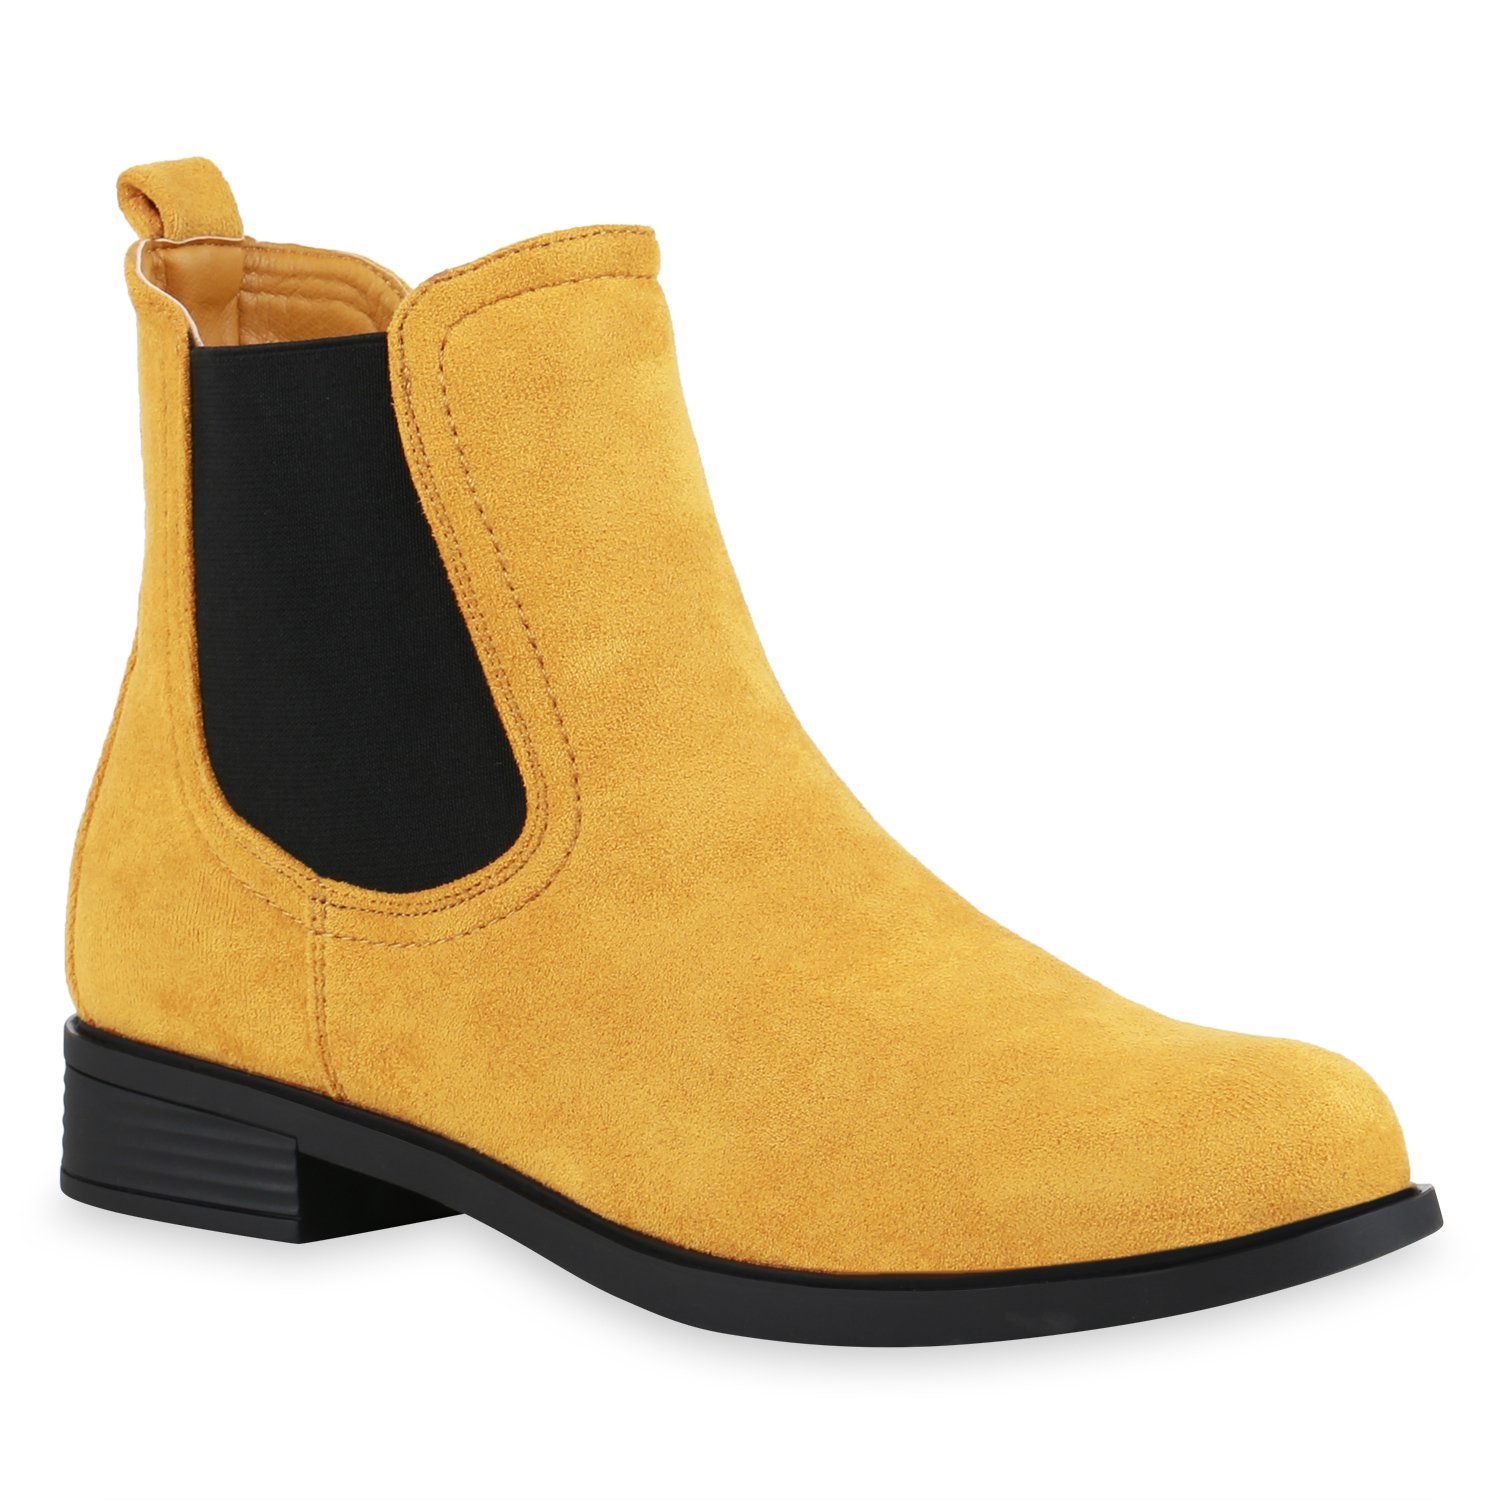 HILL Dark Schuhe Bequeme 835401 Yellow Chelseaboots VAN